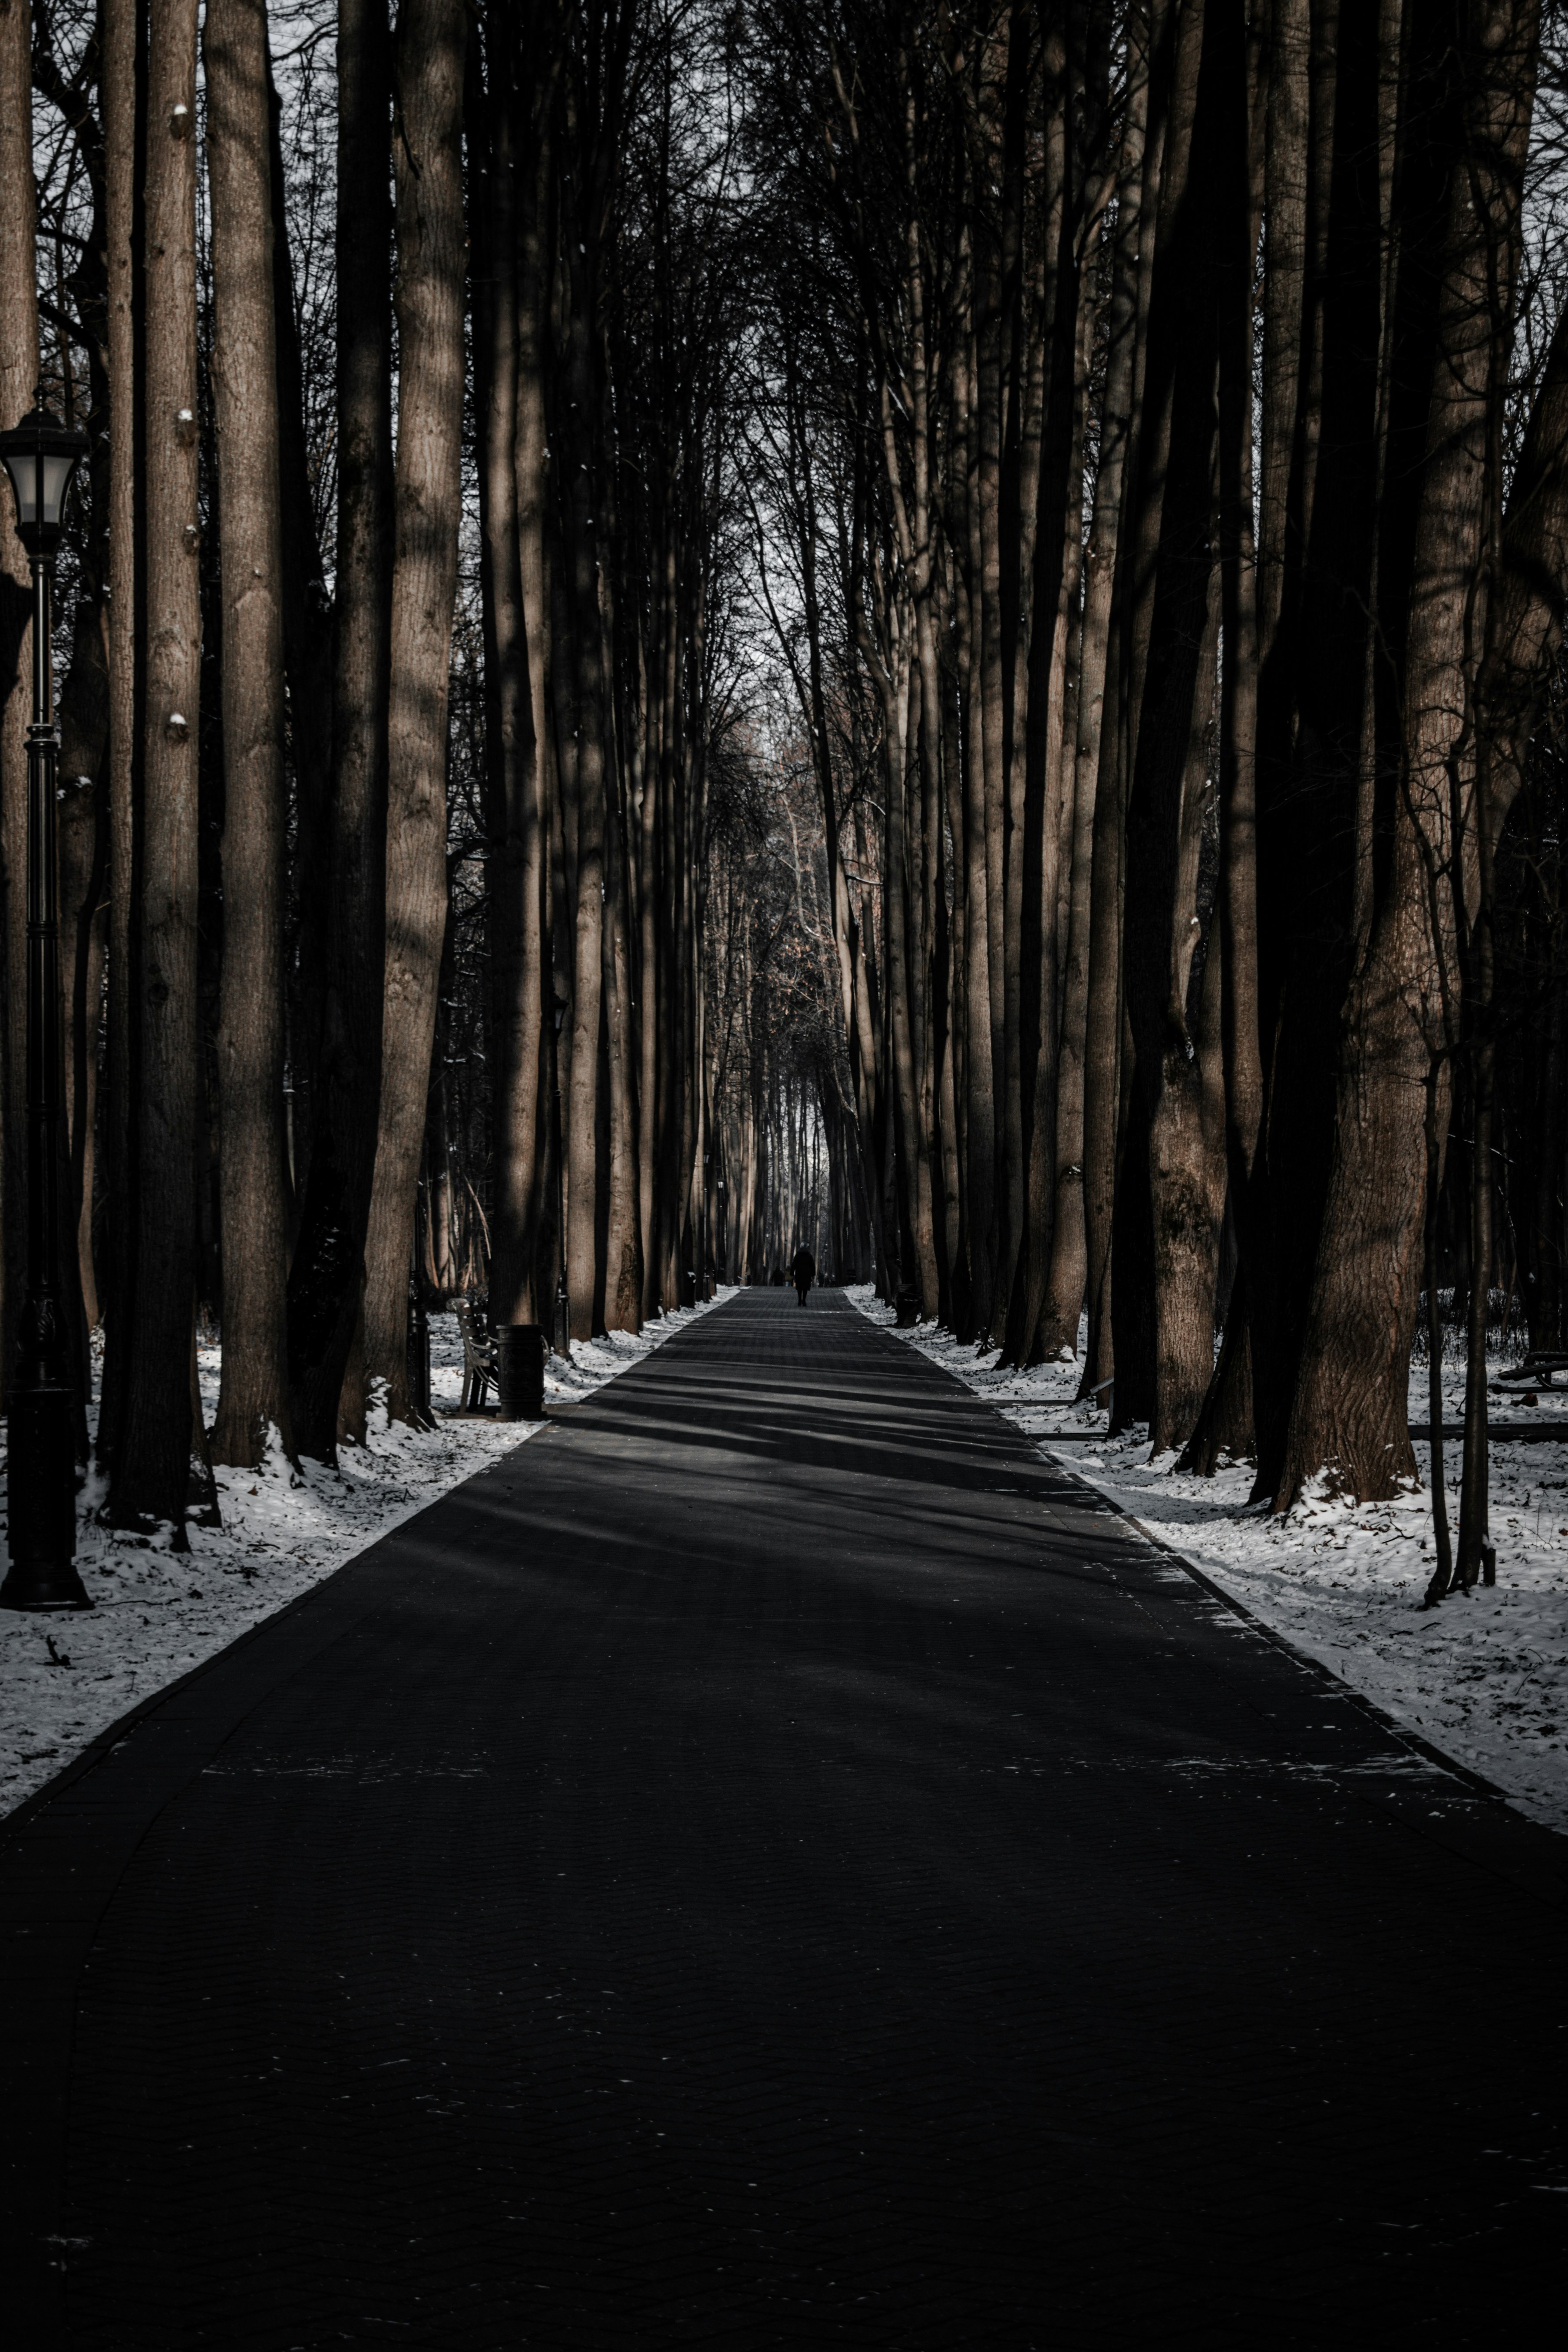 black road in between trees during daytime